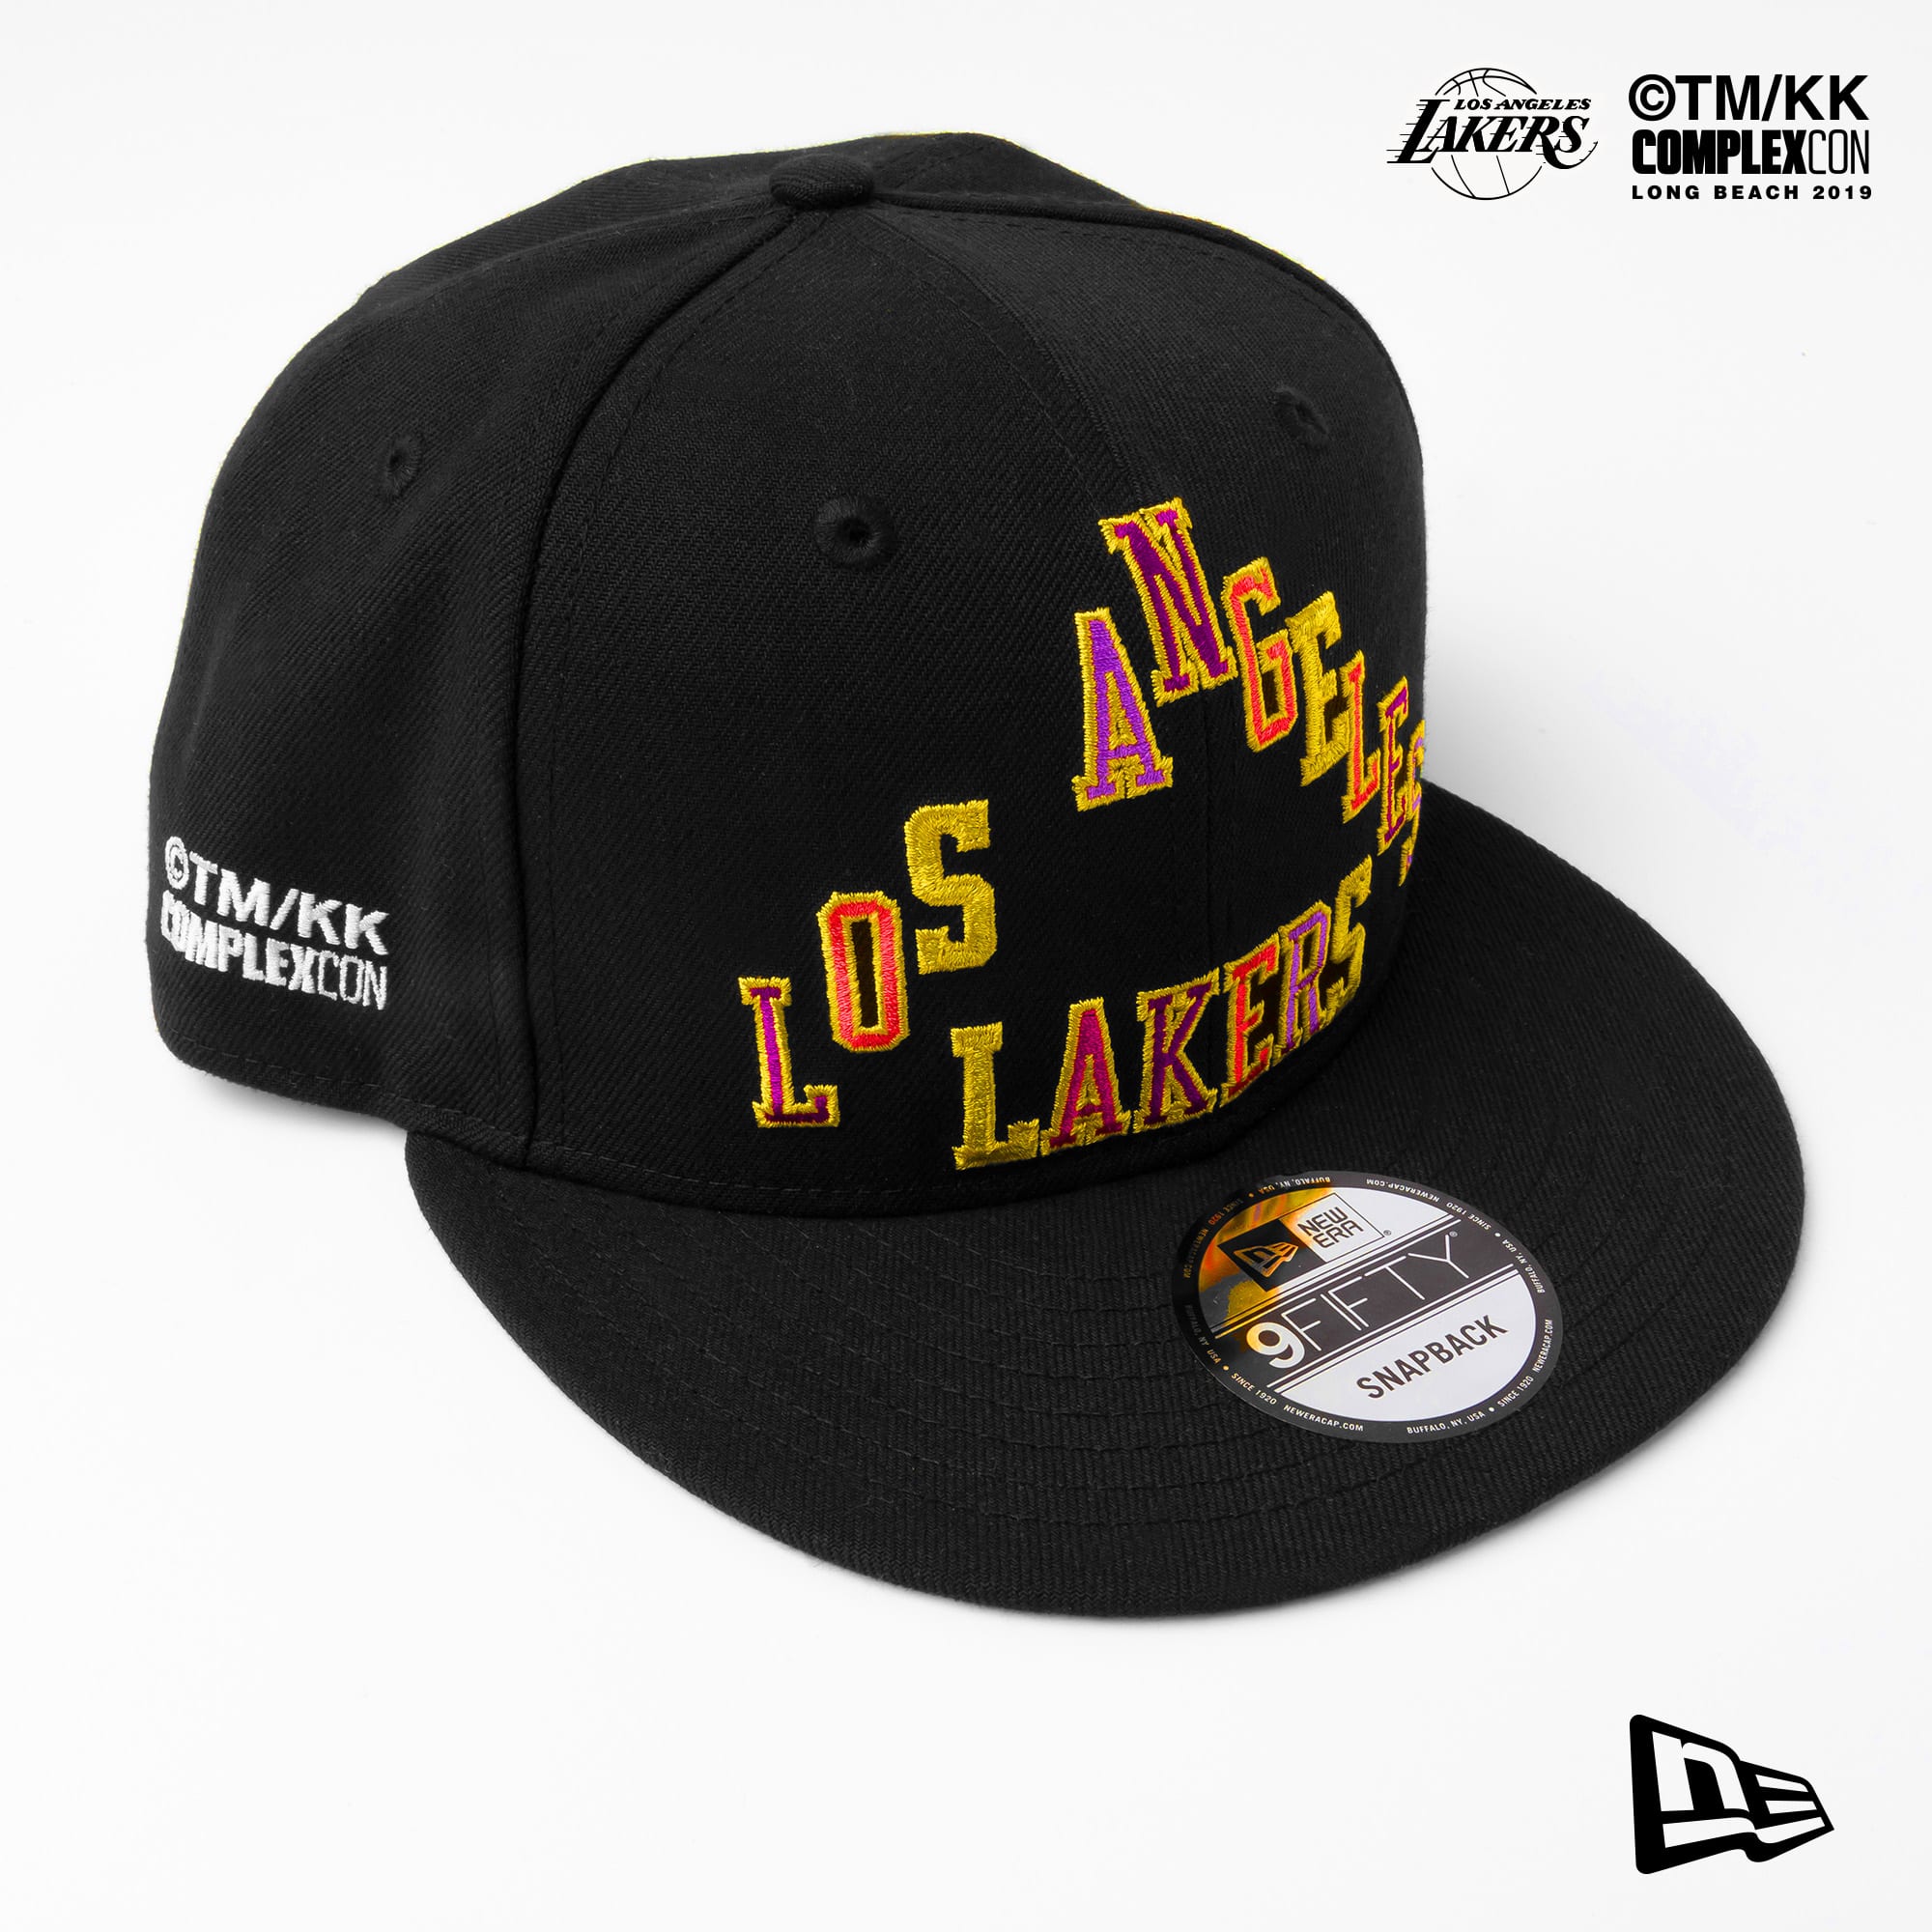 Complexcon Lakers Takashi Murukami New Era Black Hat